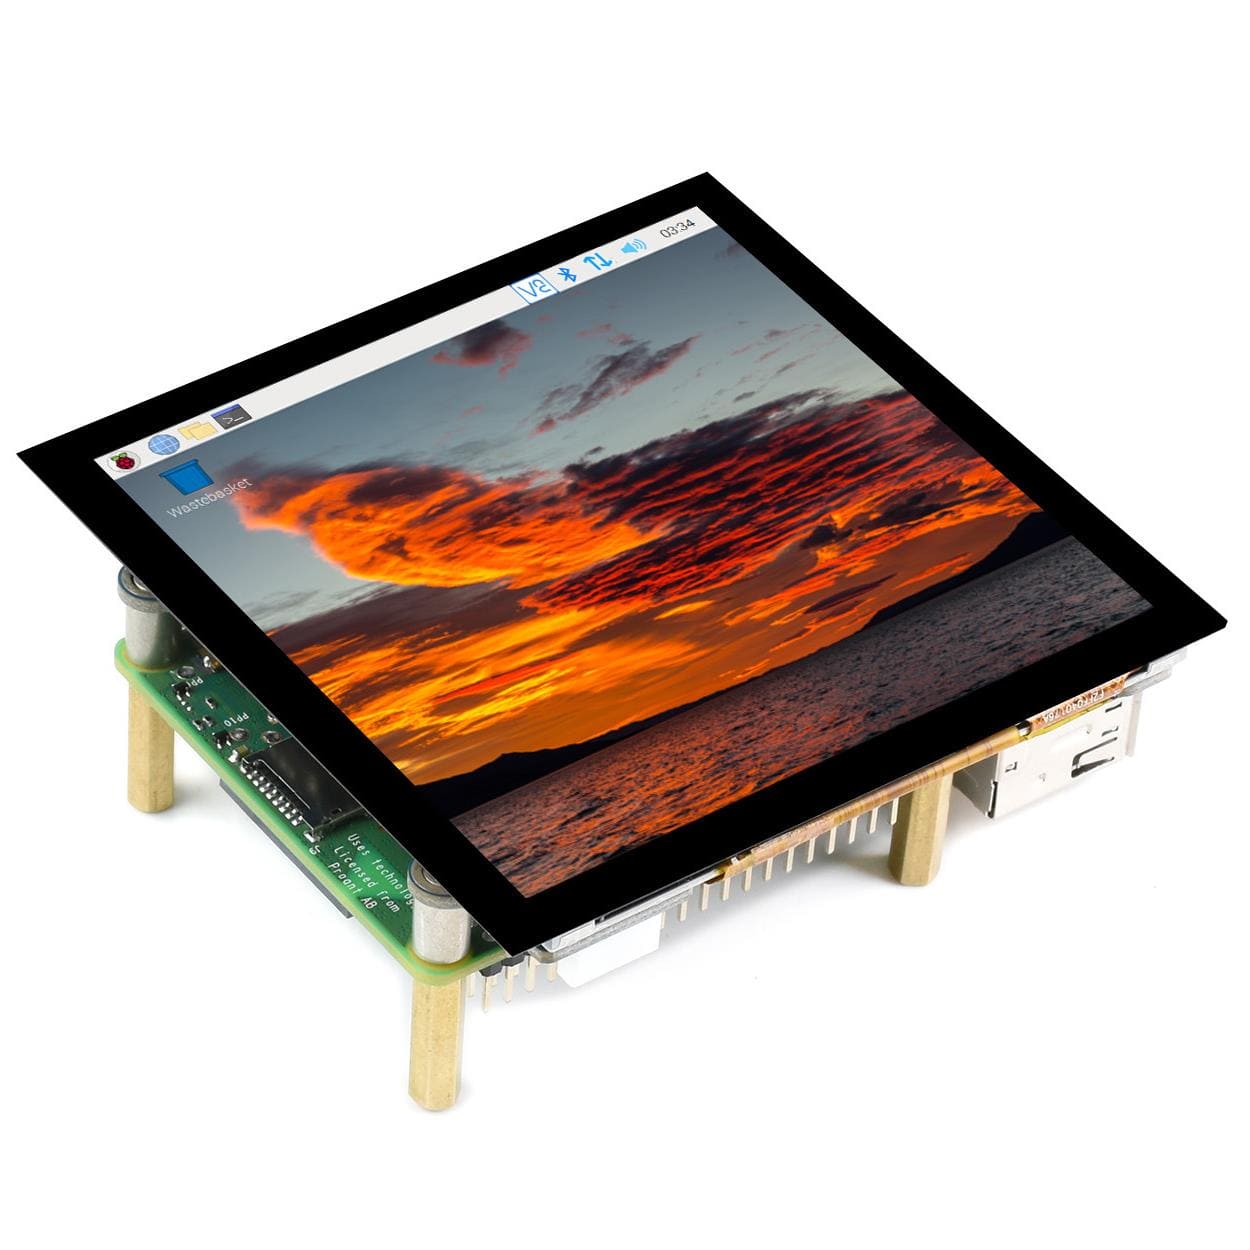 4" IPS HDMI Square Capacitive Touchscreen for Raspberry Pi (720x720) - The Pi Hut